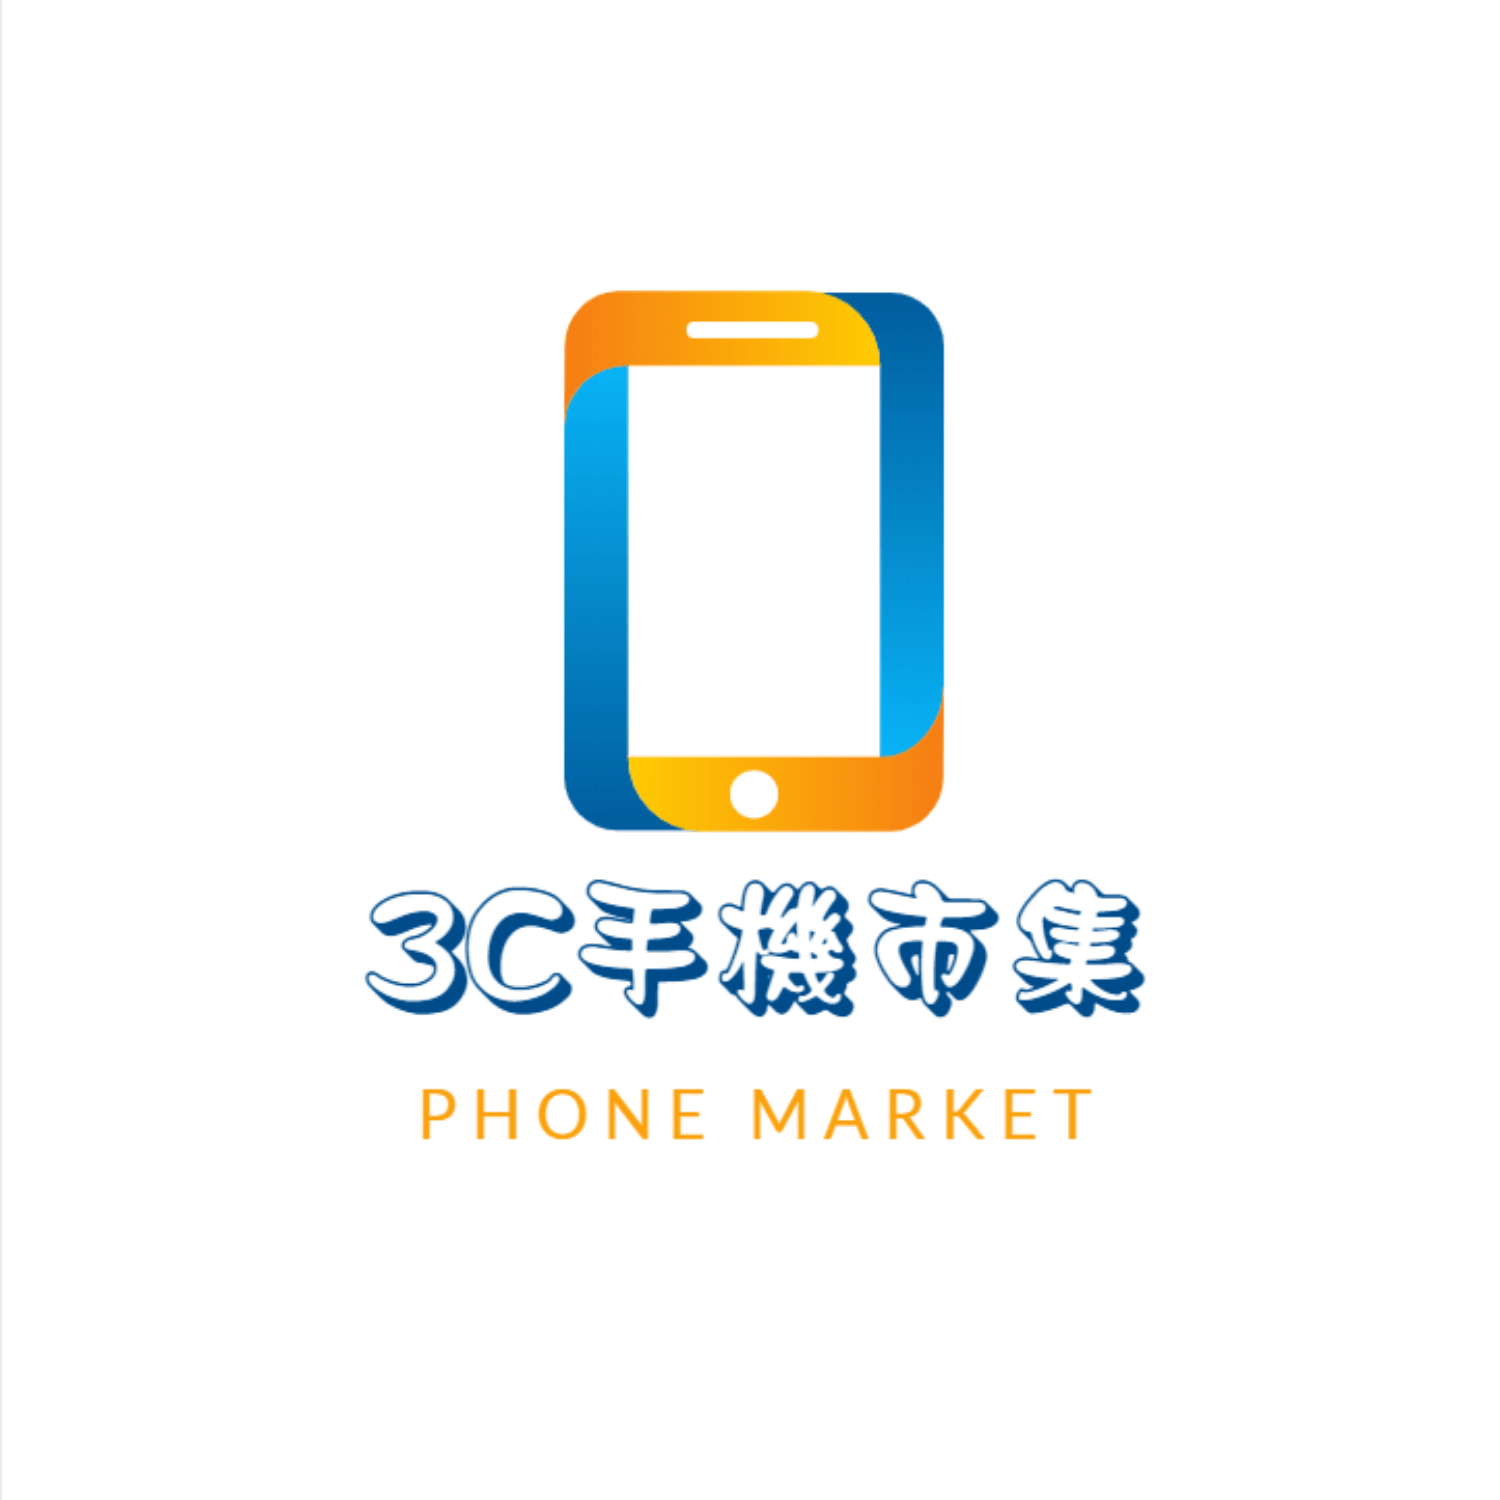 3c Phone Market